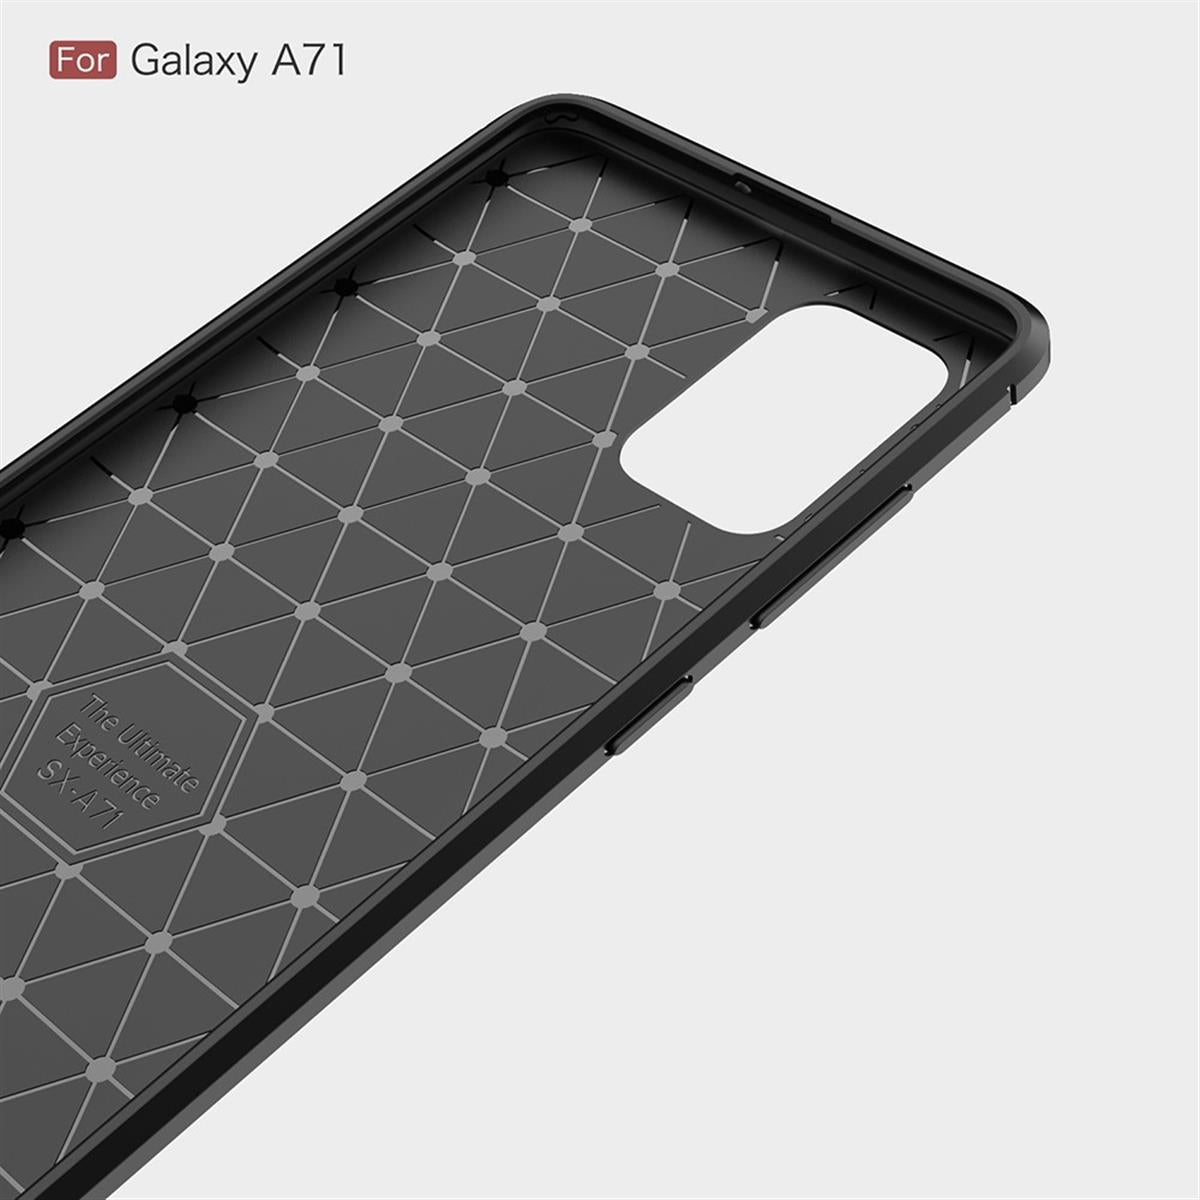 Hülle für Samsung Galaxy A71 Handyhülle Silikon Case Schutzhülle Carbon Farben